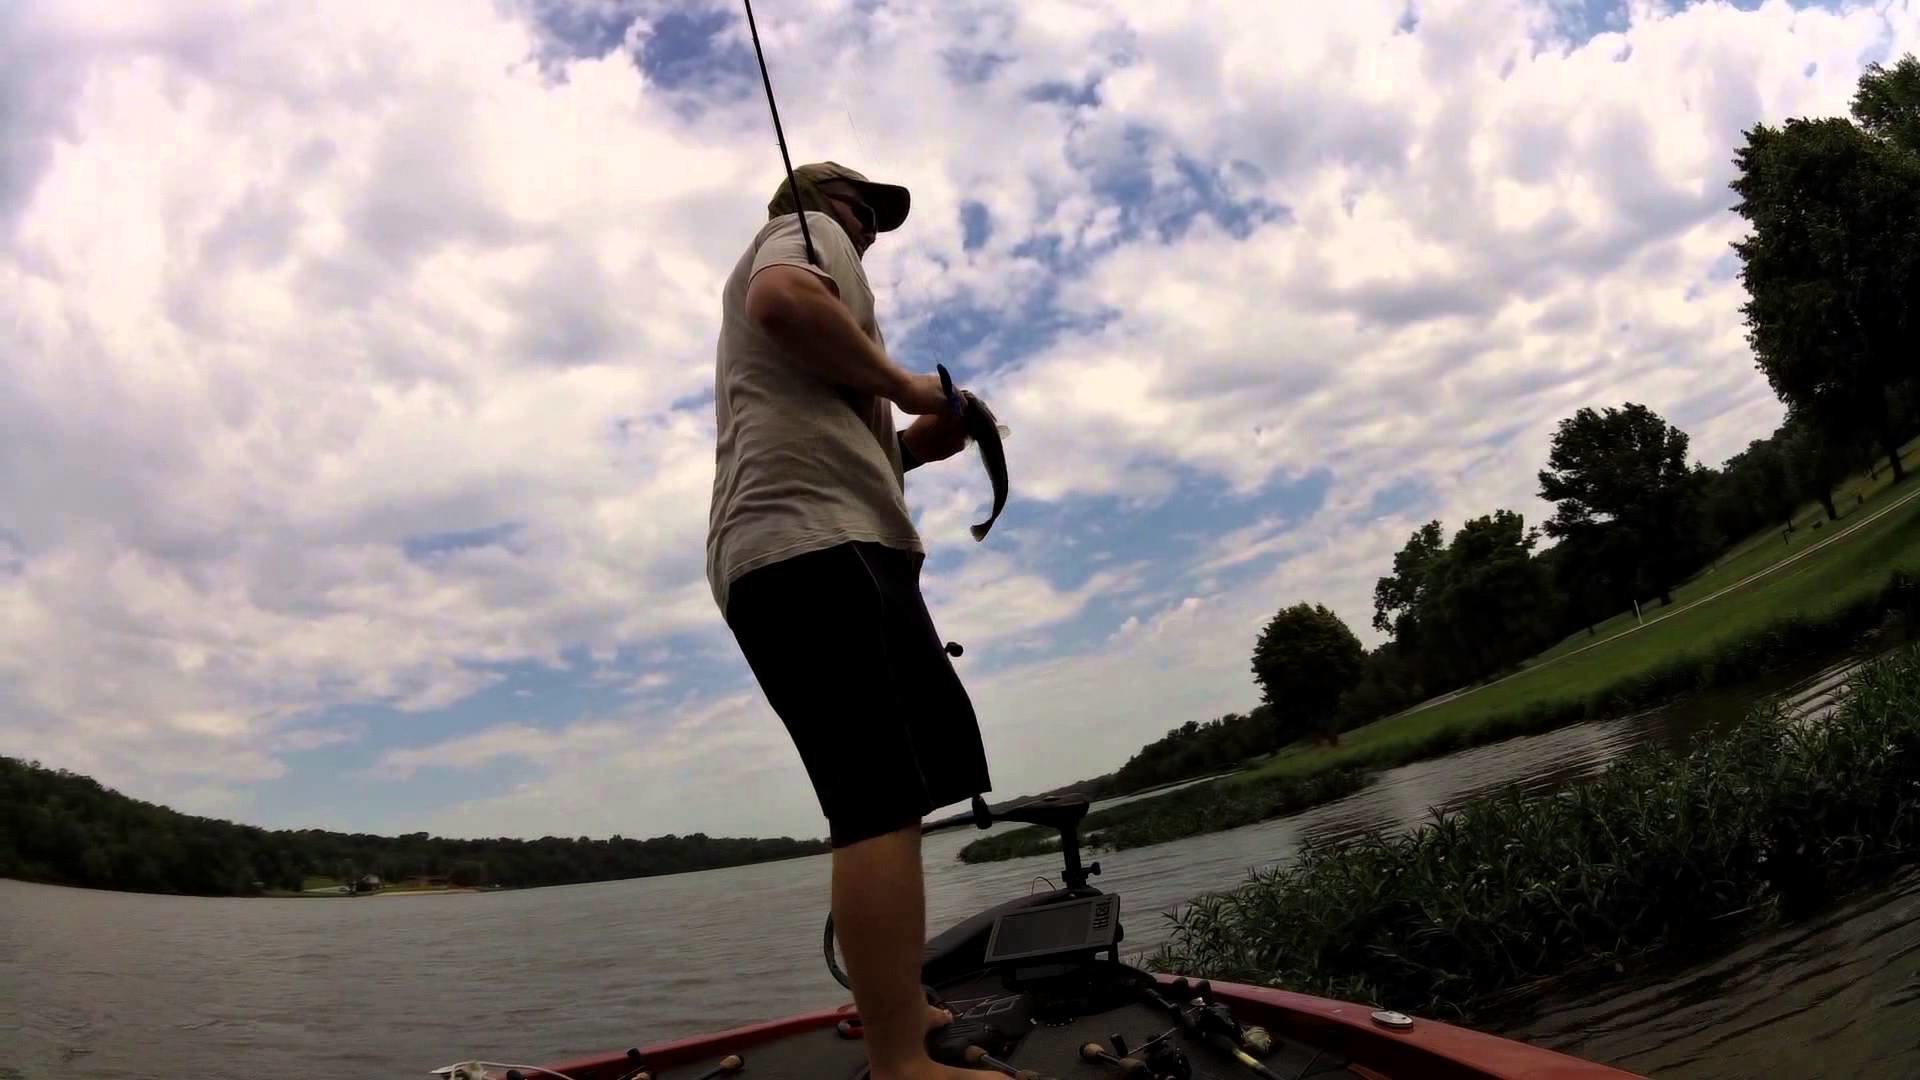 1920x1080 Olathe Lake bass fishing 7/1/15